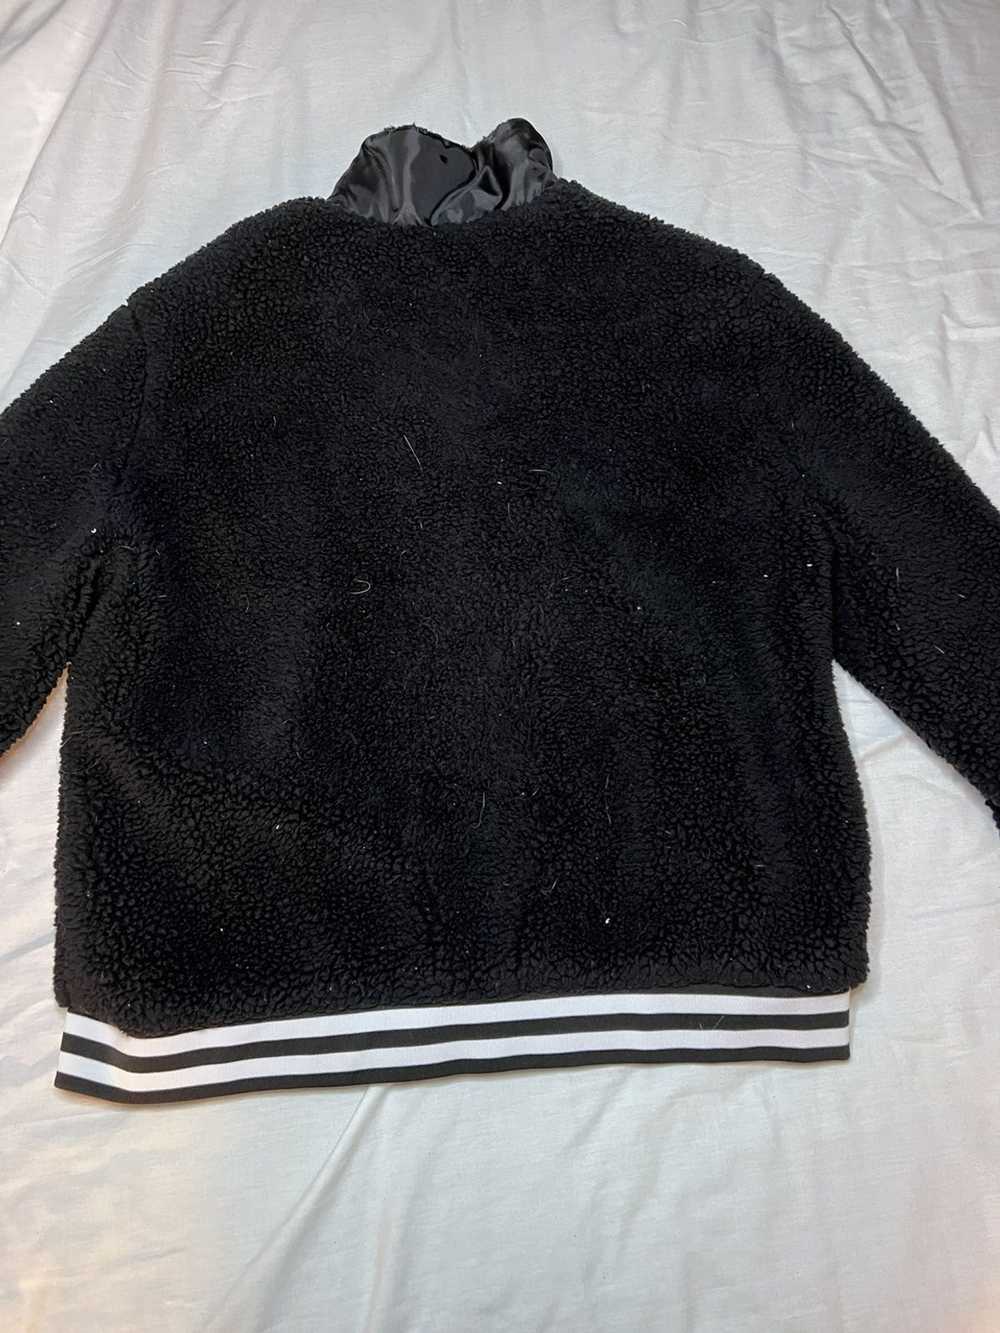 Forever 21 Fuzzy Black Zip Up Jacket - image 3